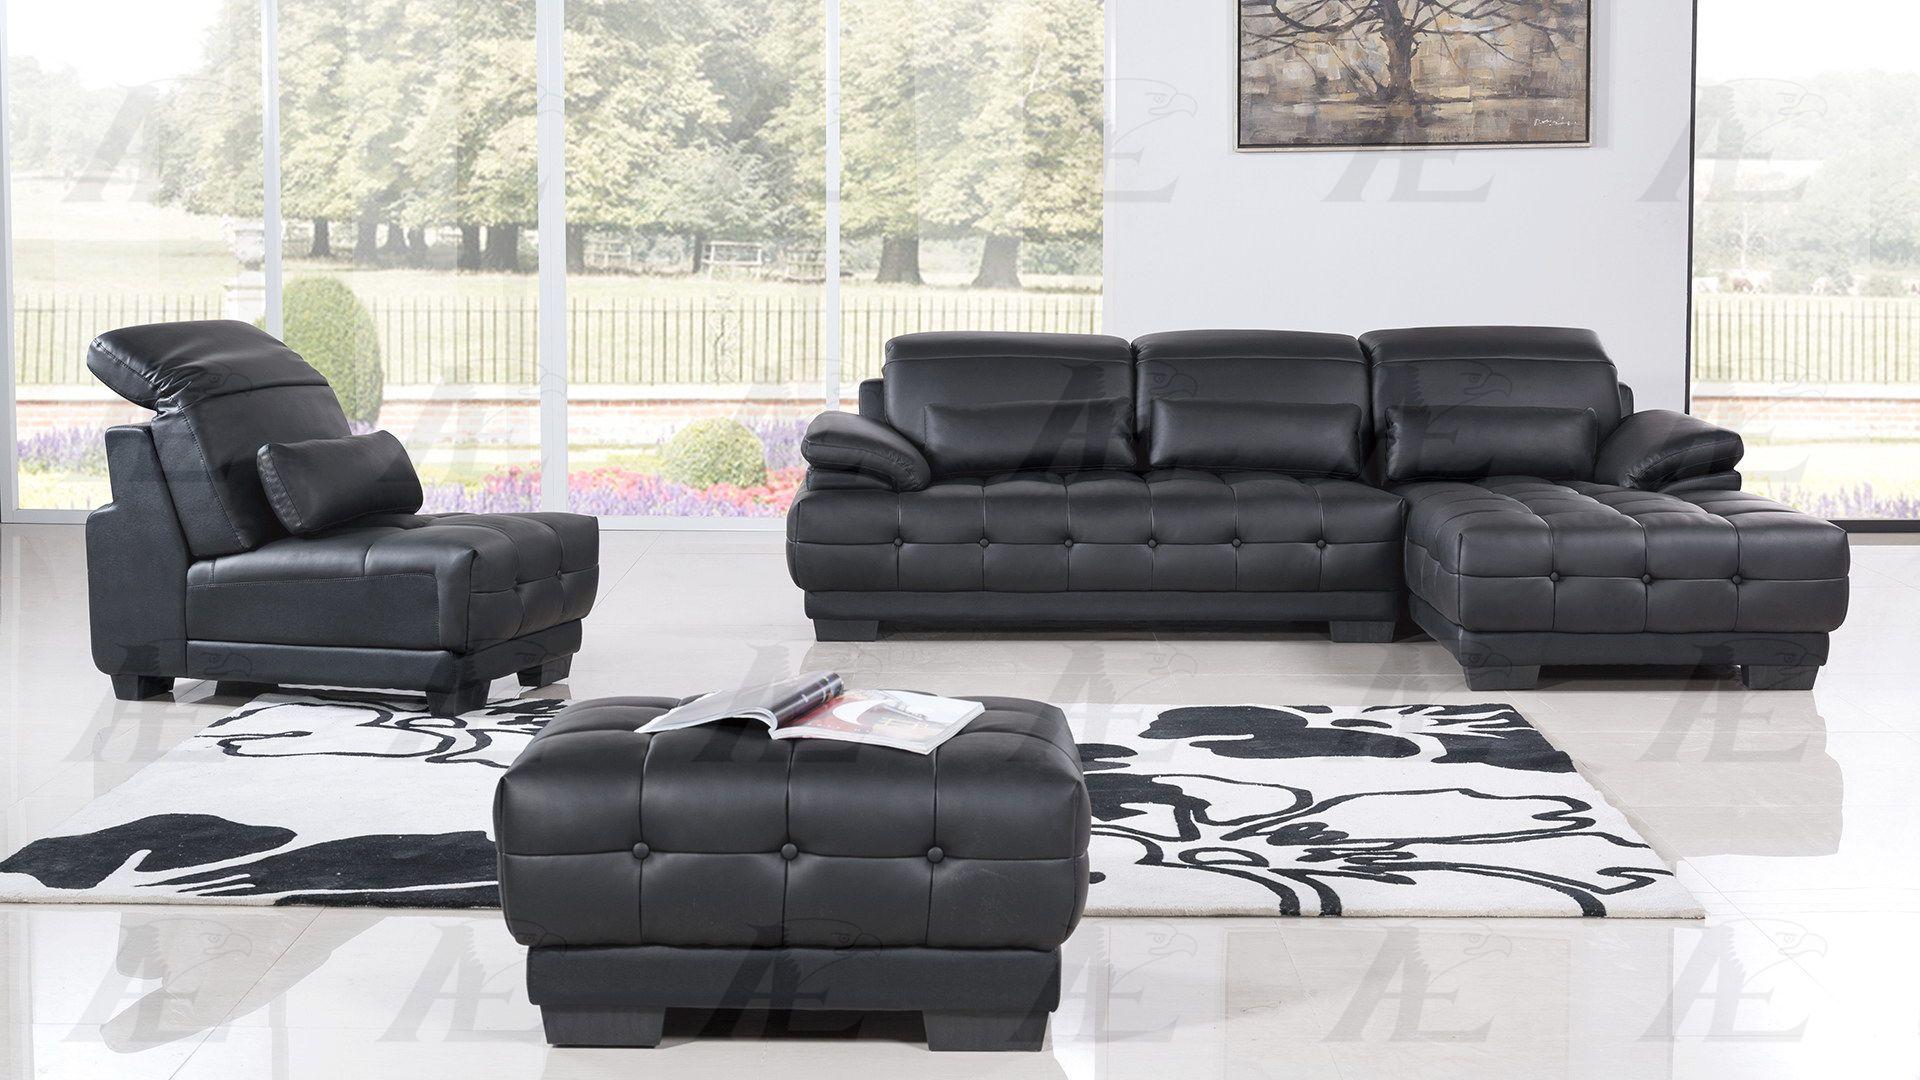 Modern Sofa Chaise Chair and Ottoman Set AE-L296-BK AE-L296-BK Set-4 RHC in Black Bonded Leather